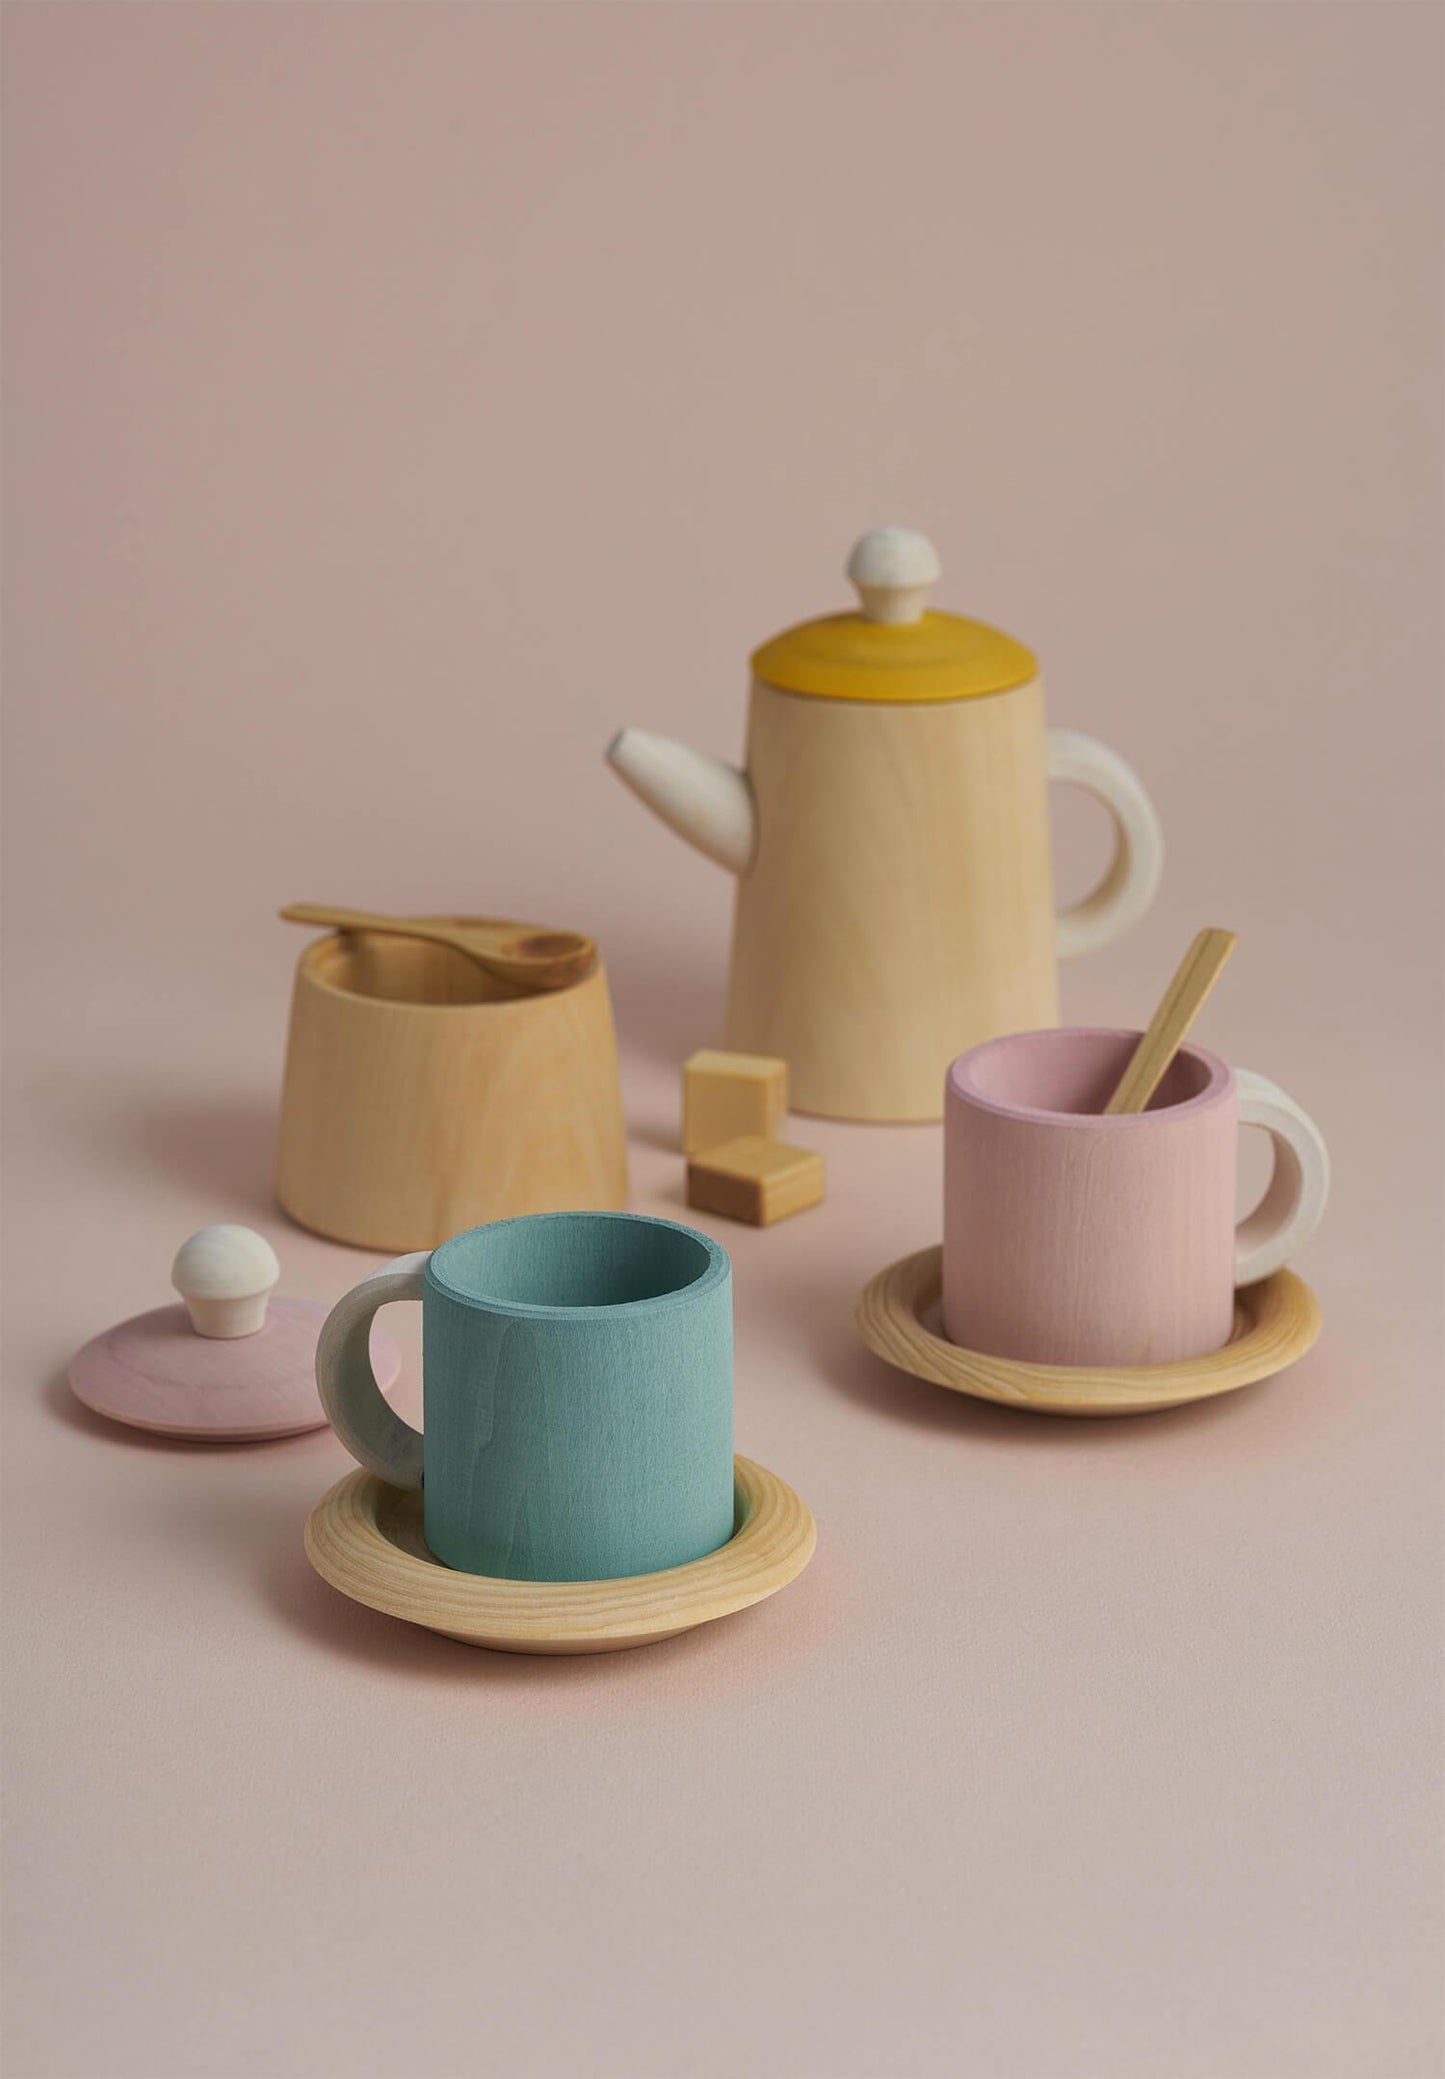 Raduga Grez Raduga Grez Wooden Tea Set, Mustard and Pink - blueottertoys-RG02005